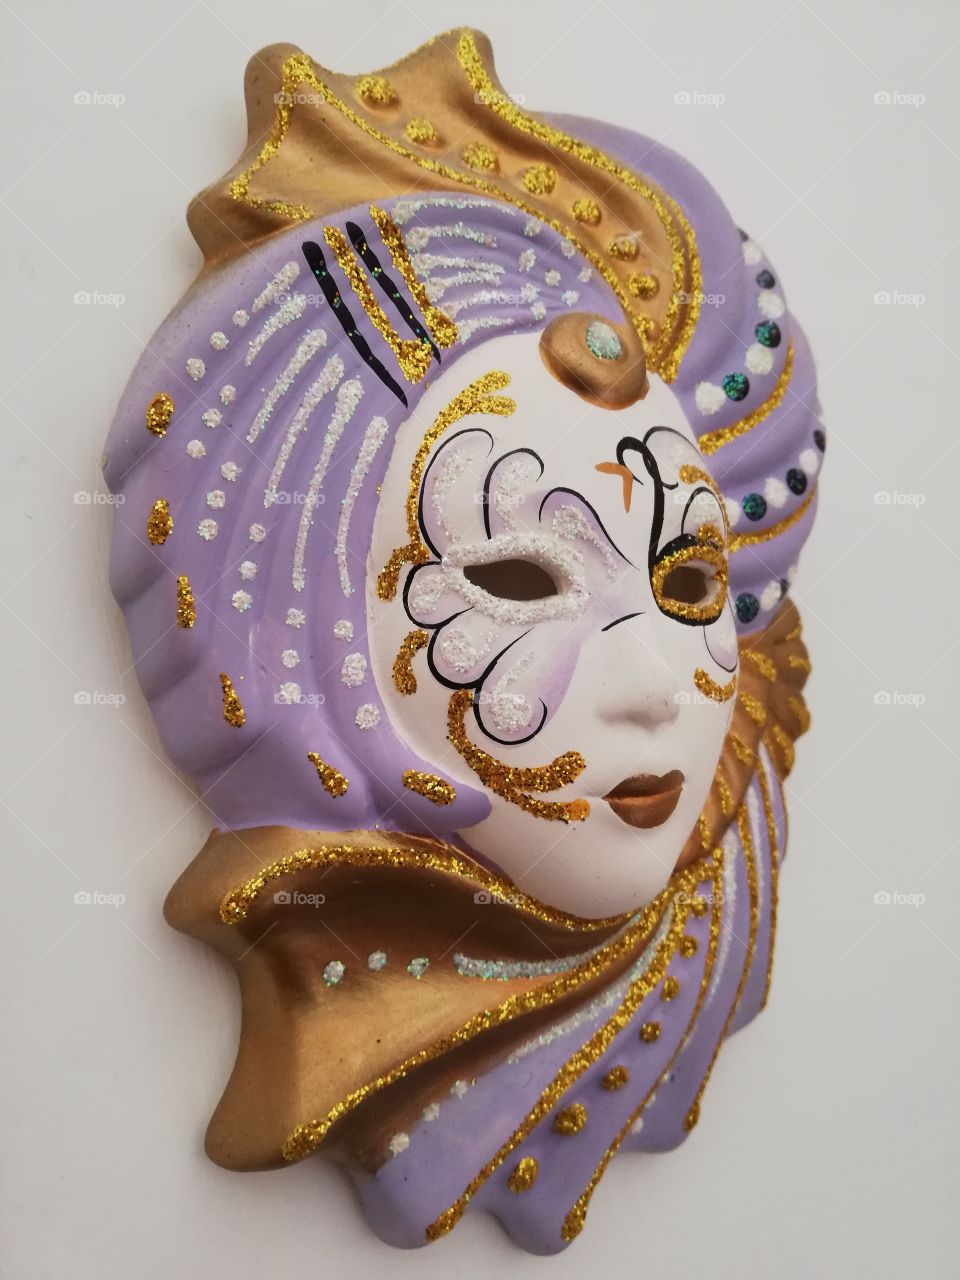 Carnival mask decoration